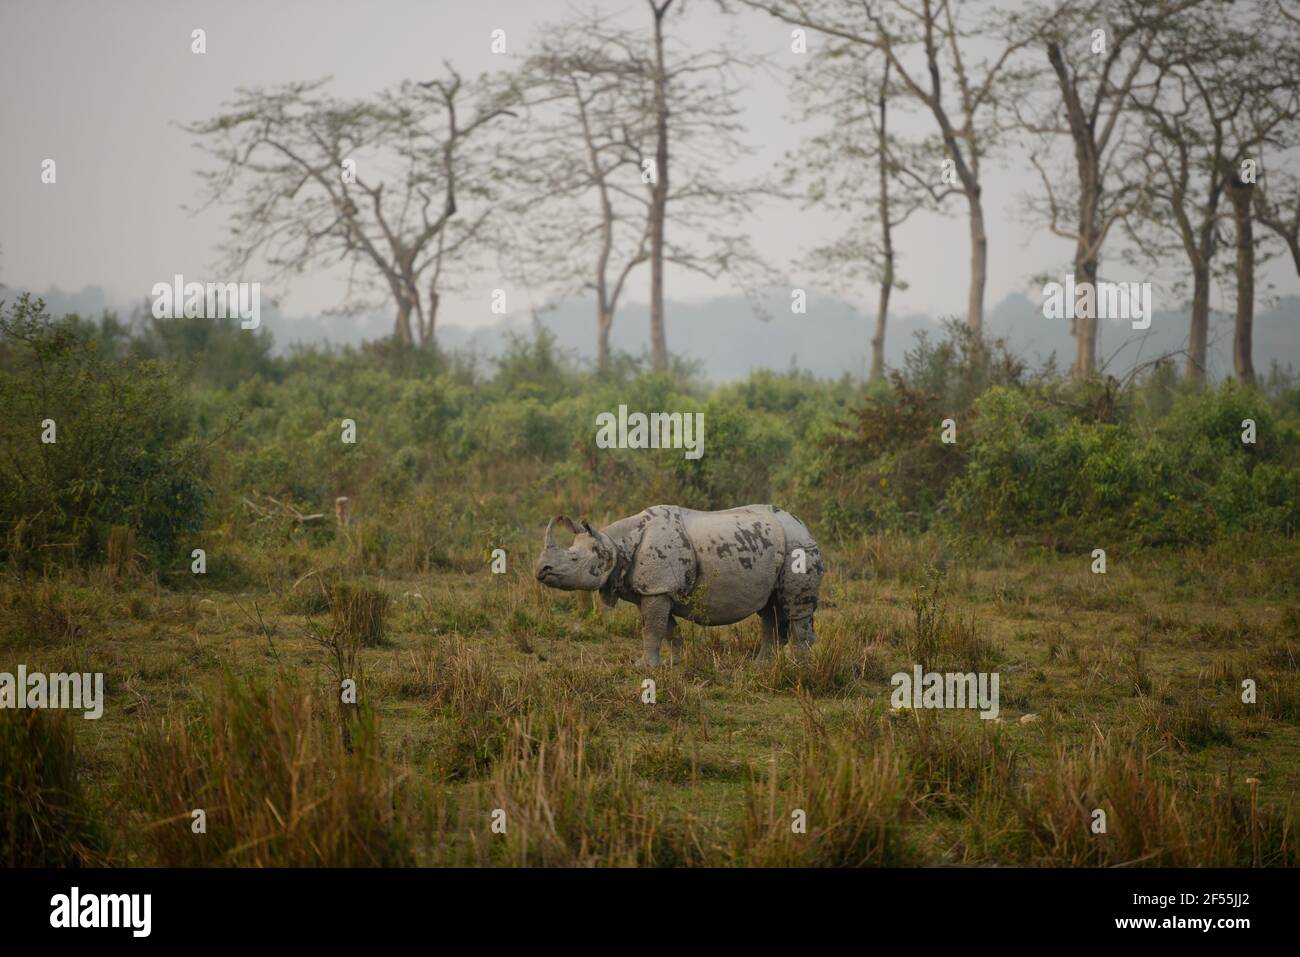 Grand Rhino indien, Rhinoceros unicornis, dans son environnement, Assam Banque D'Images